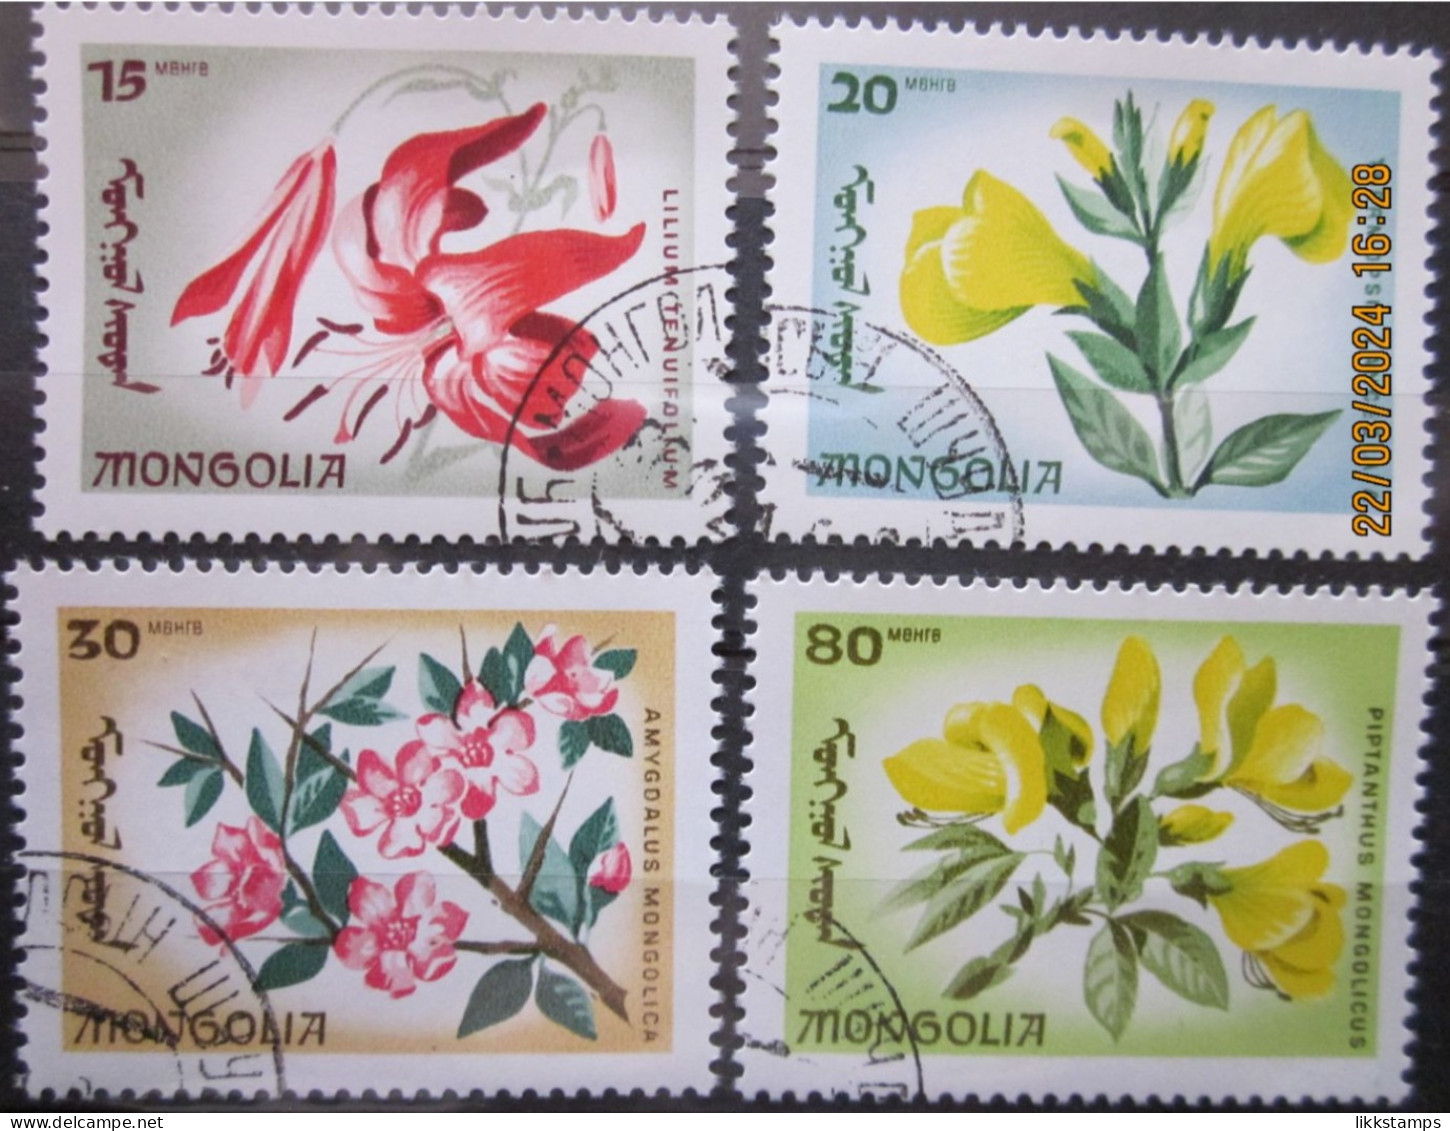 MONGOLIA ~ 1966 ~ S.G. NUMBERS 415 - 417 + 419, ~ FLOWERS. ~ VFU #03468 - Mongolie